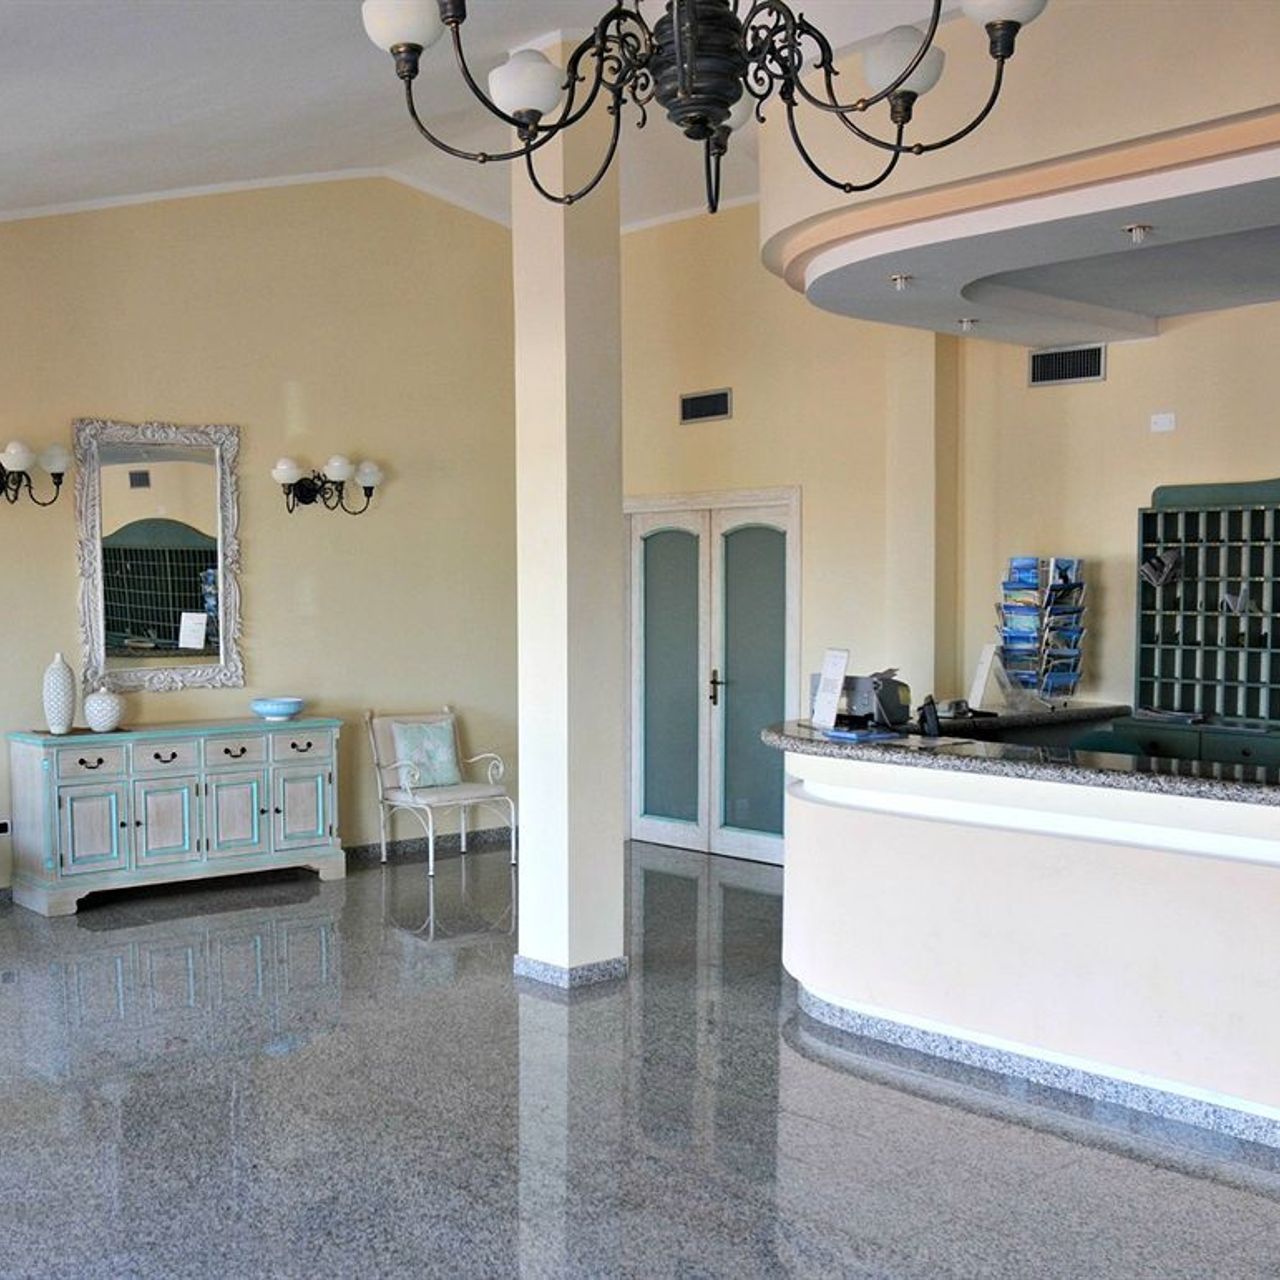 Club Hotel Baia Aranzos - Golfo Aranci - Great prices at HOTEL INFO